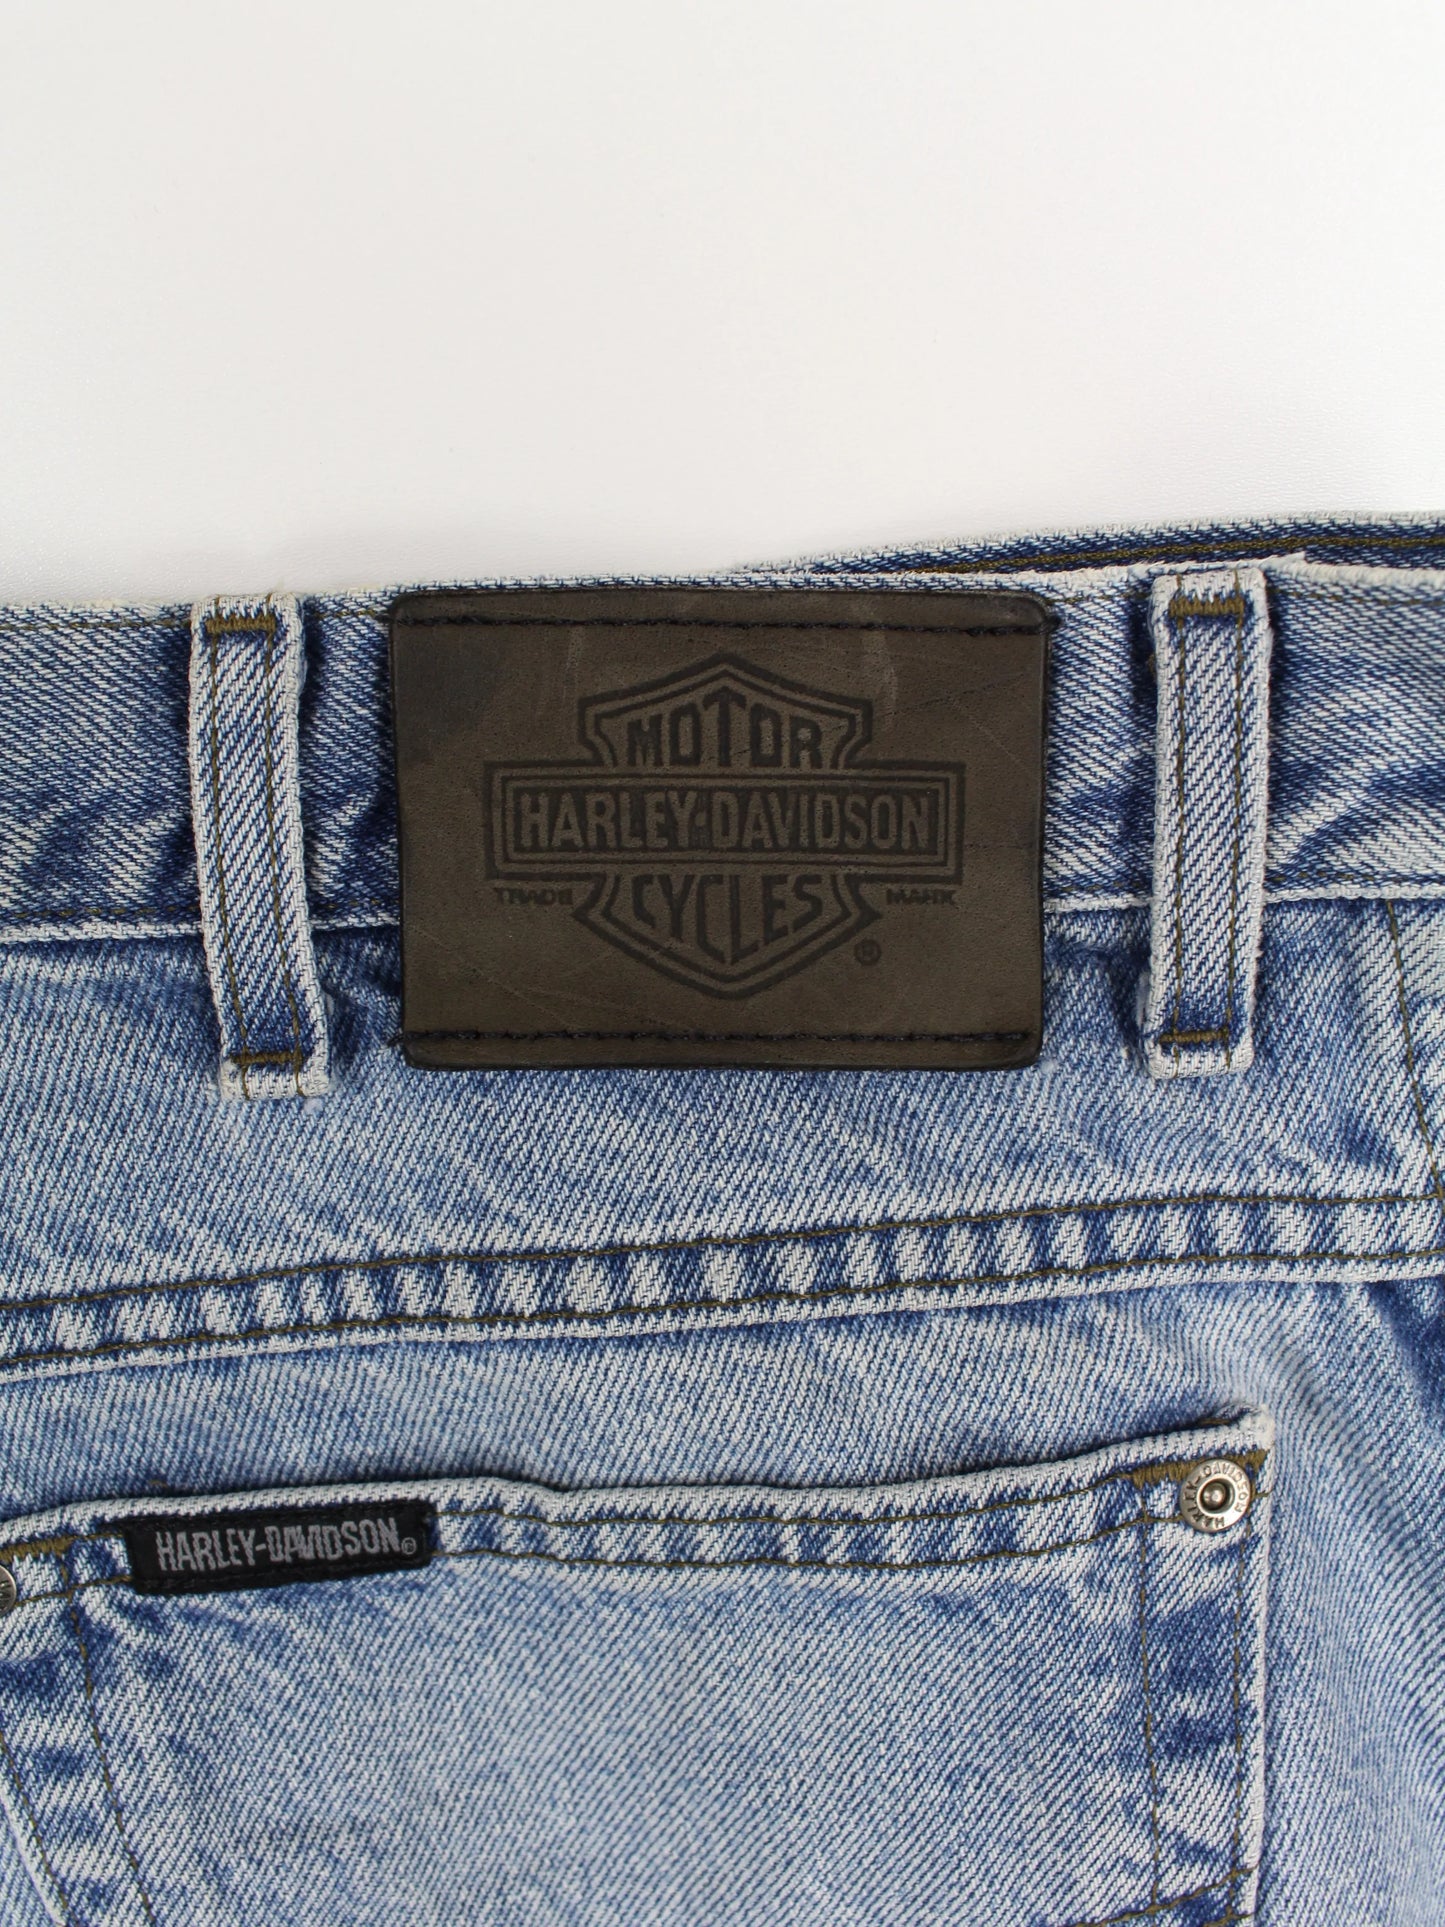 Harley Davidson Jeans Blau W40 L38